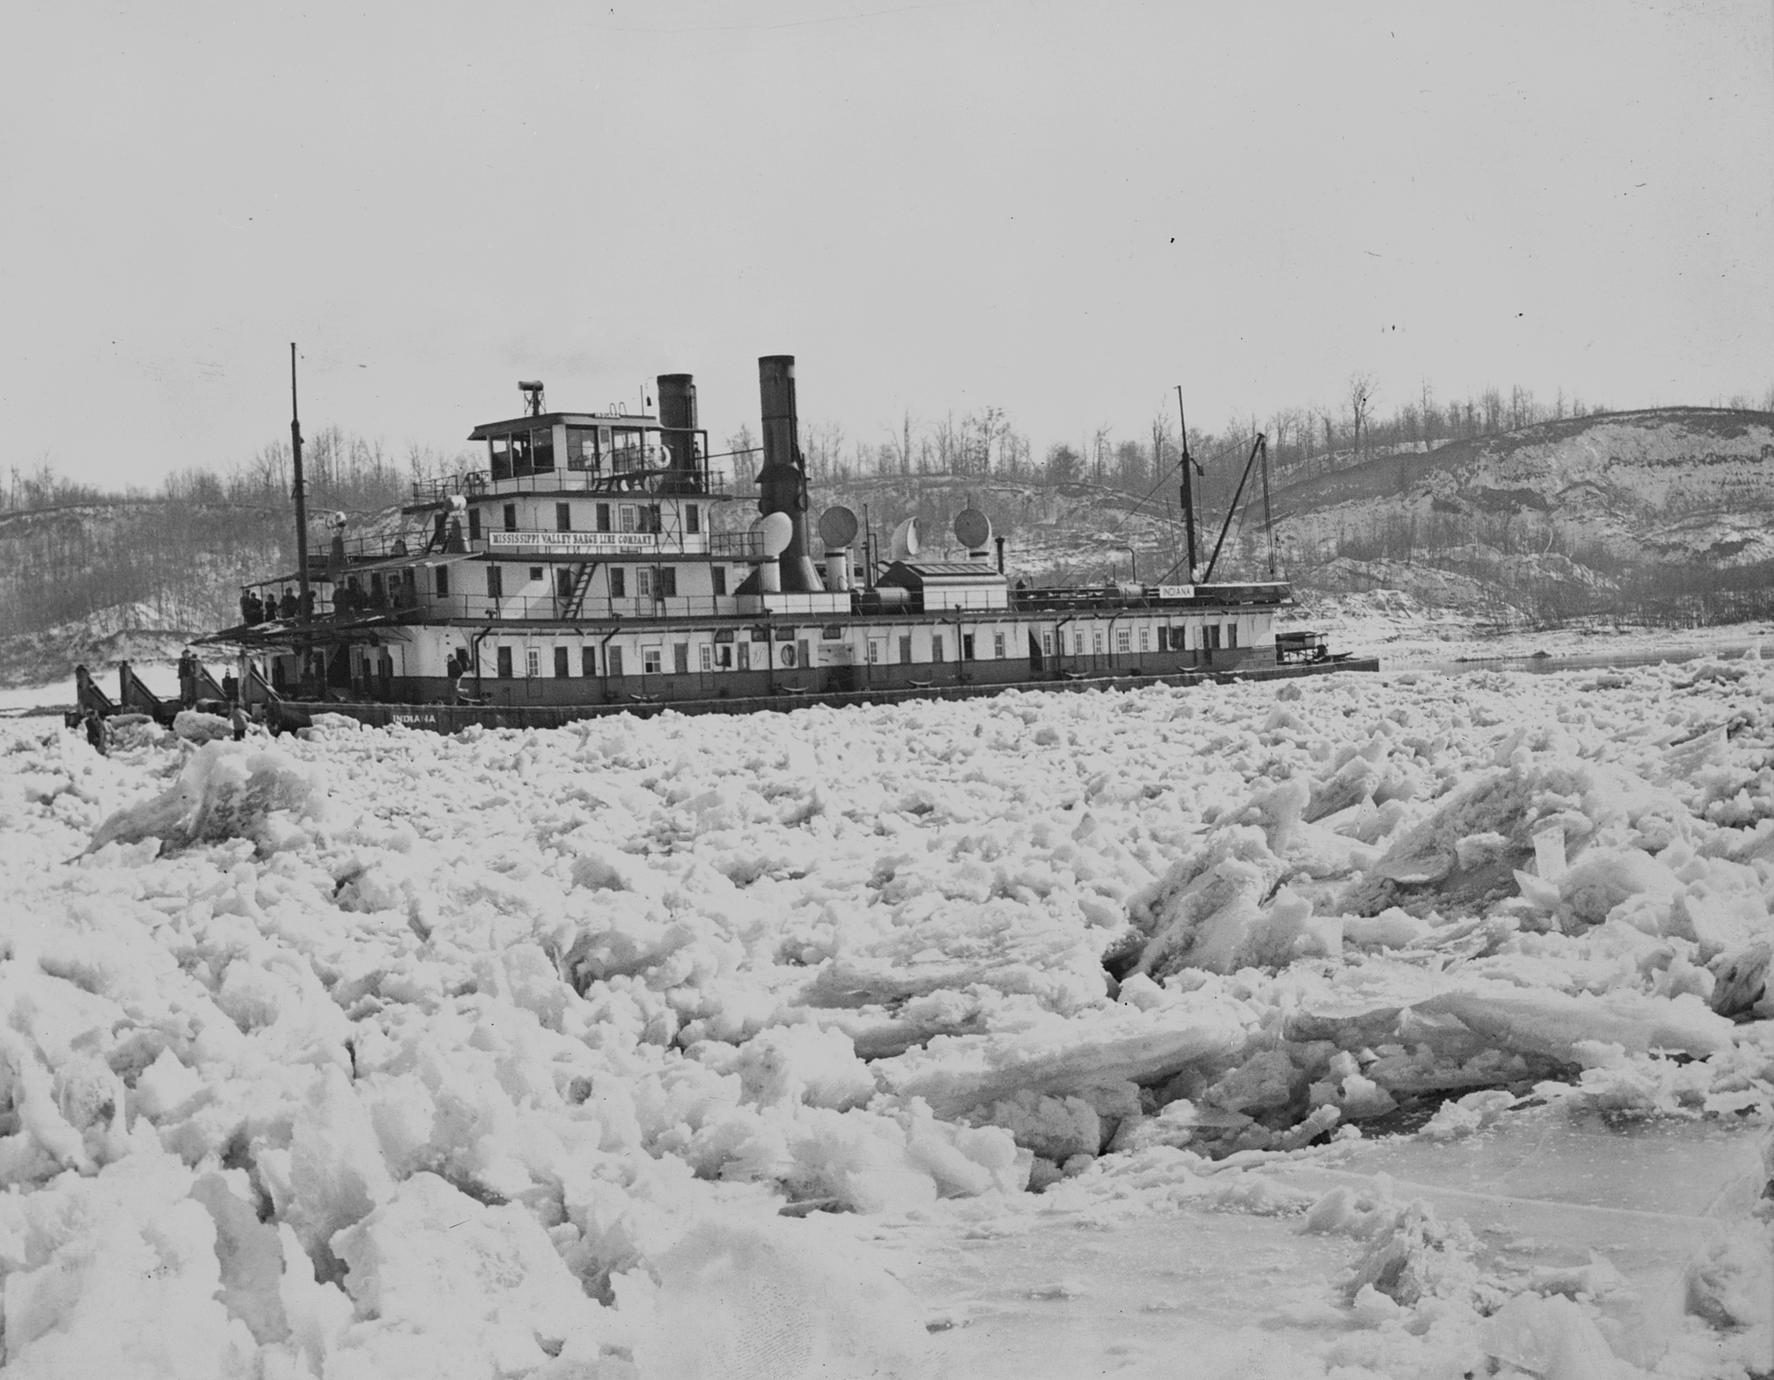 Indiana (Towboat, 1930-1949?)